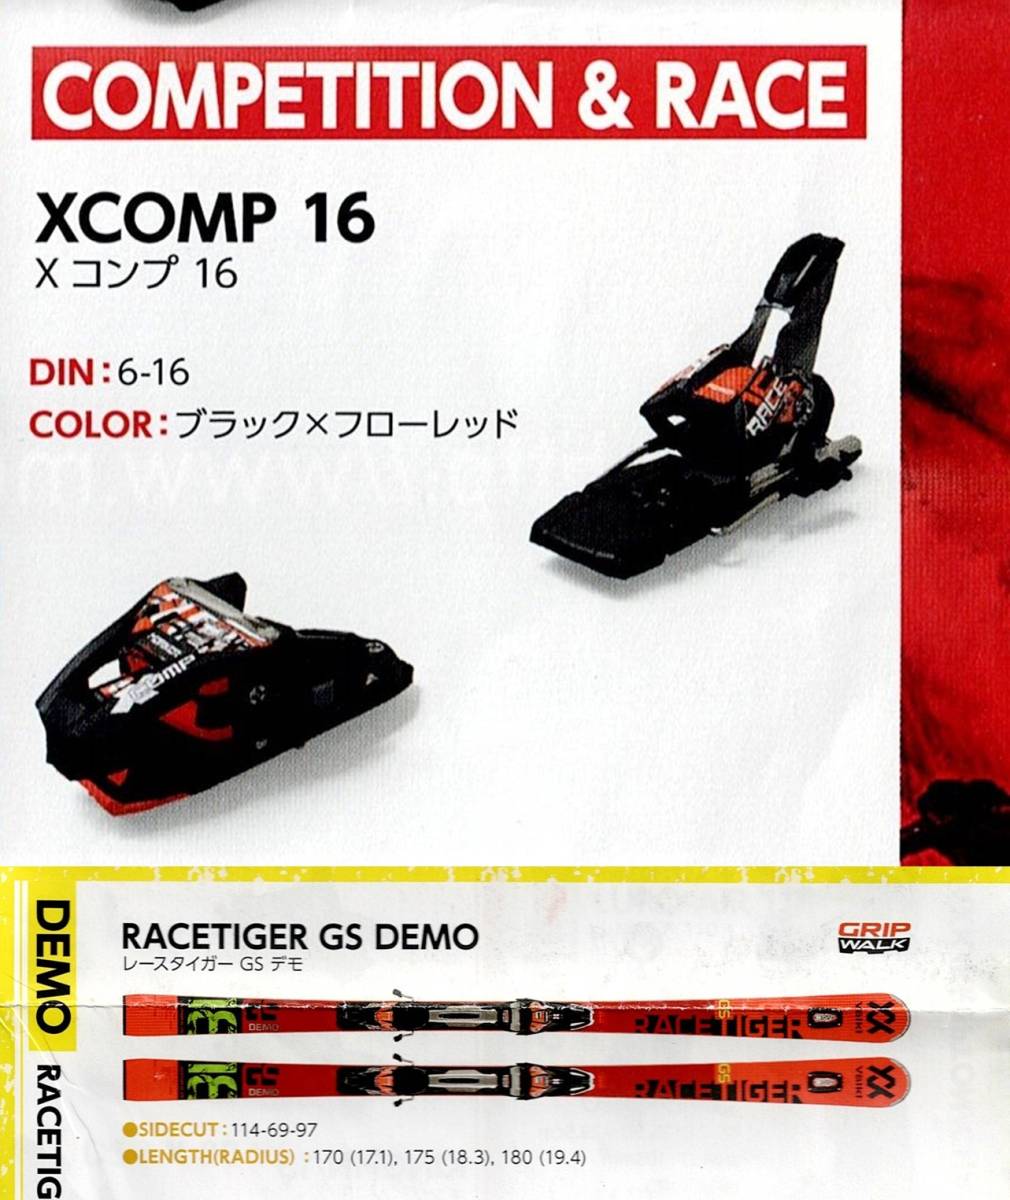 ☆20-21 VOLKL RACETIGER GS DEMO+rMOTION2 16 GW☆ www.nickstellino.com